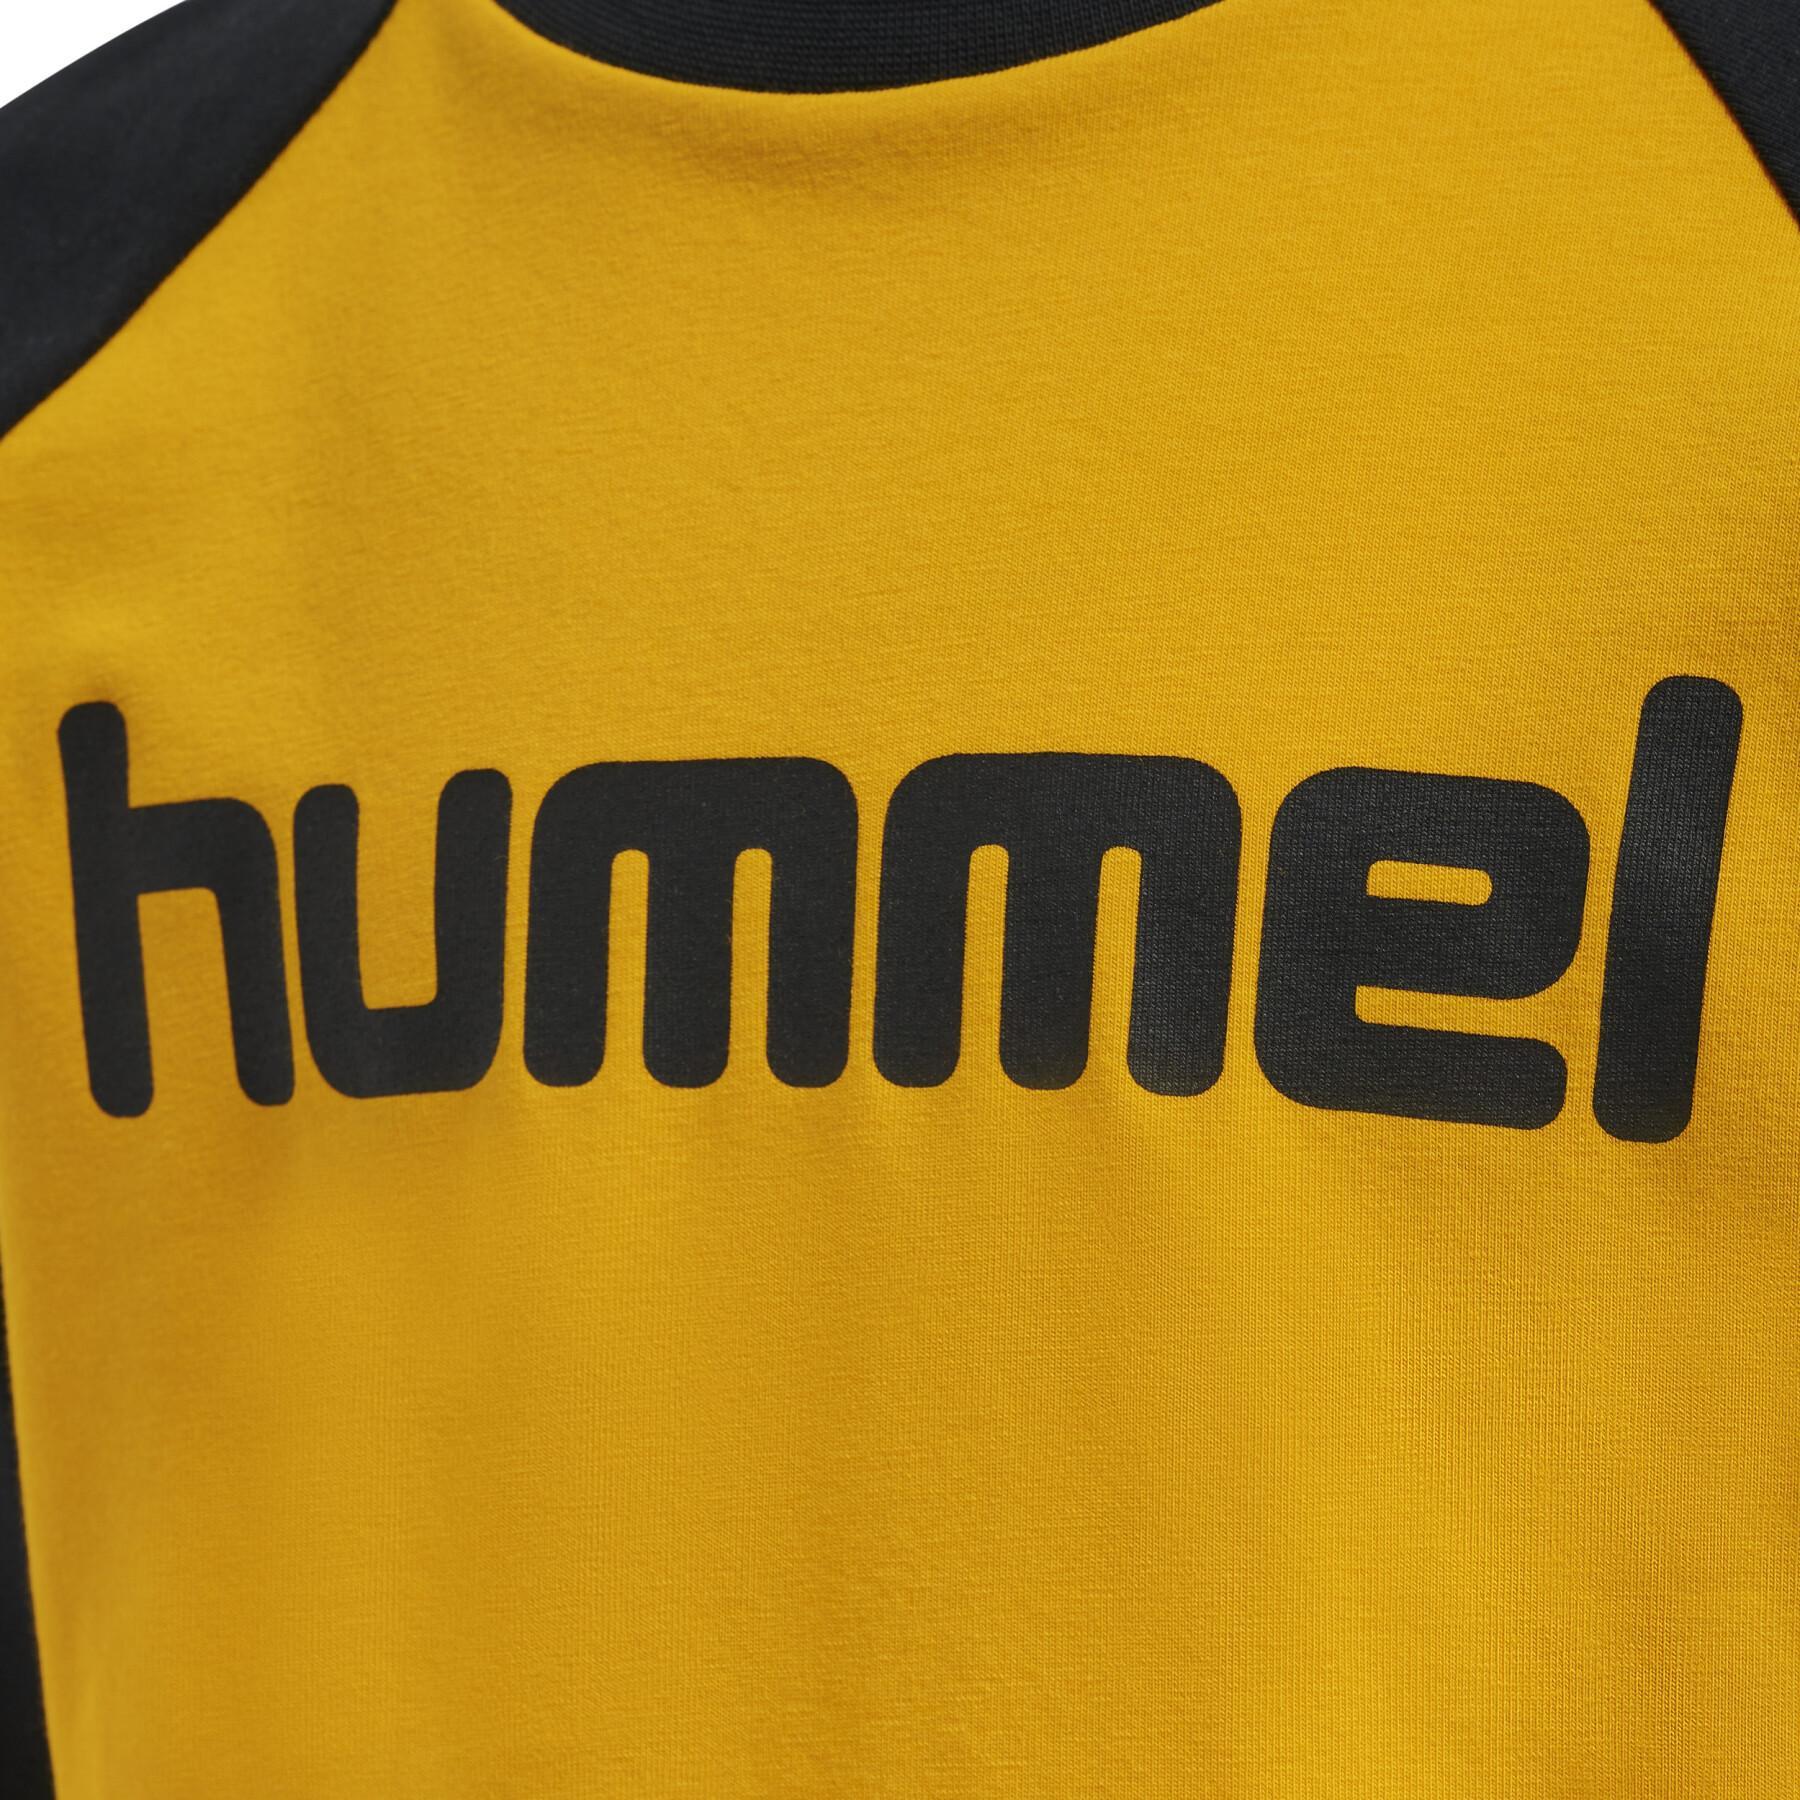 T-shirt manches longues enfant Hummel Boys